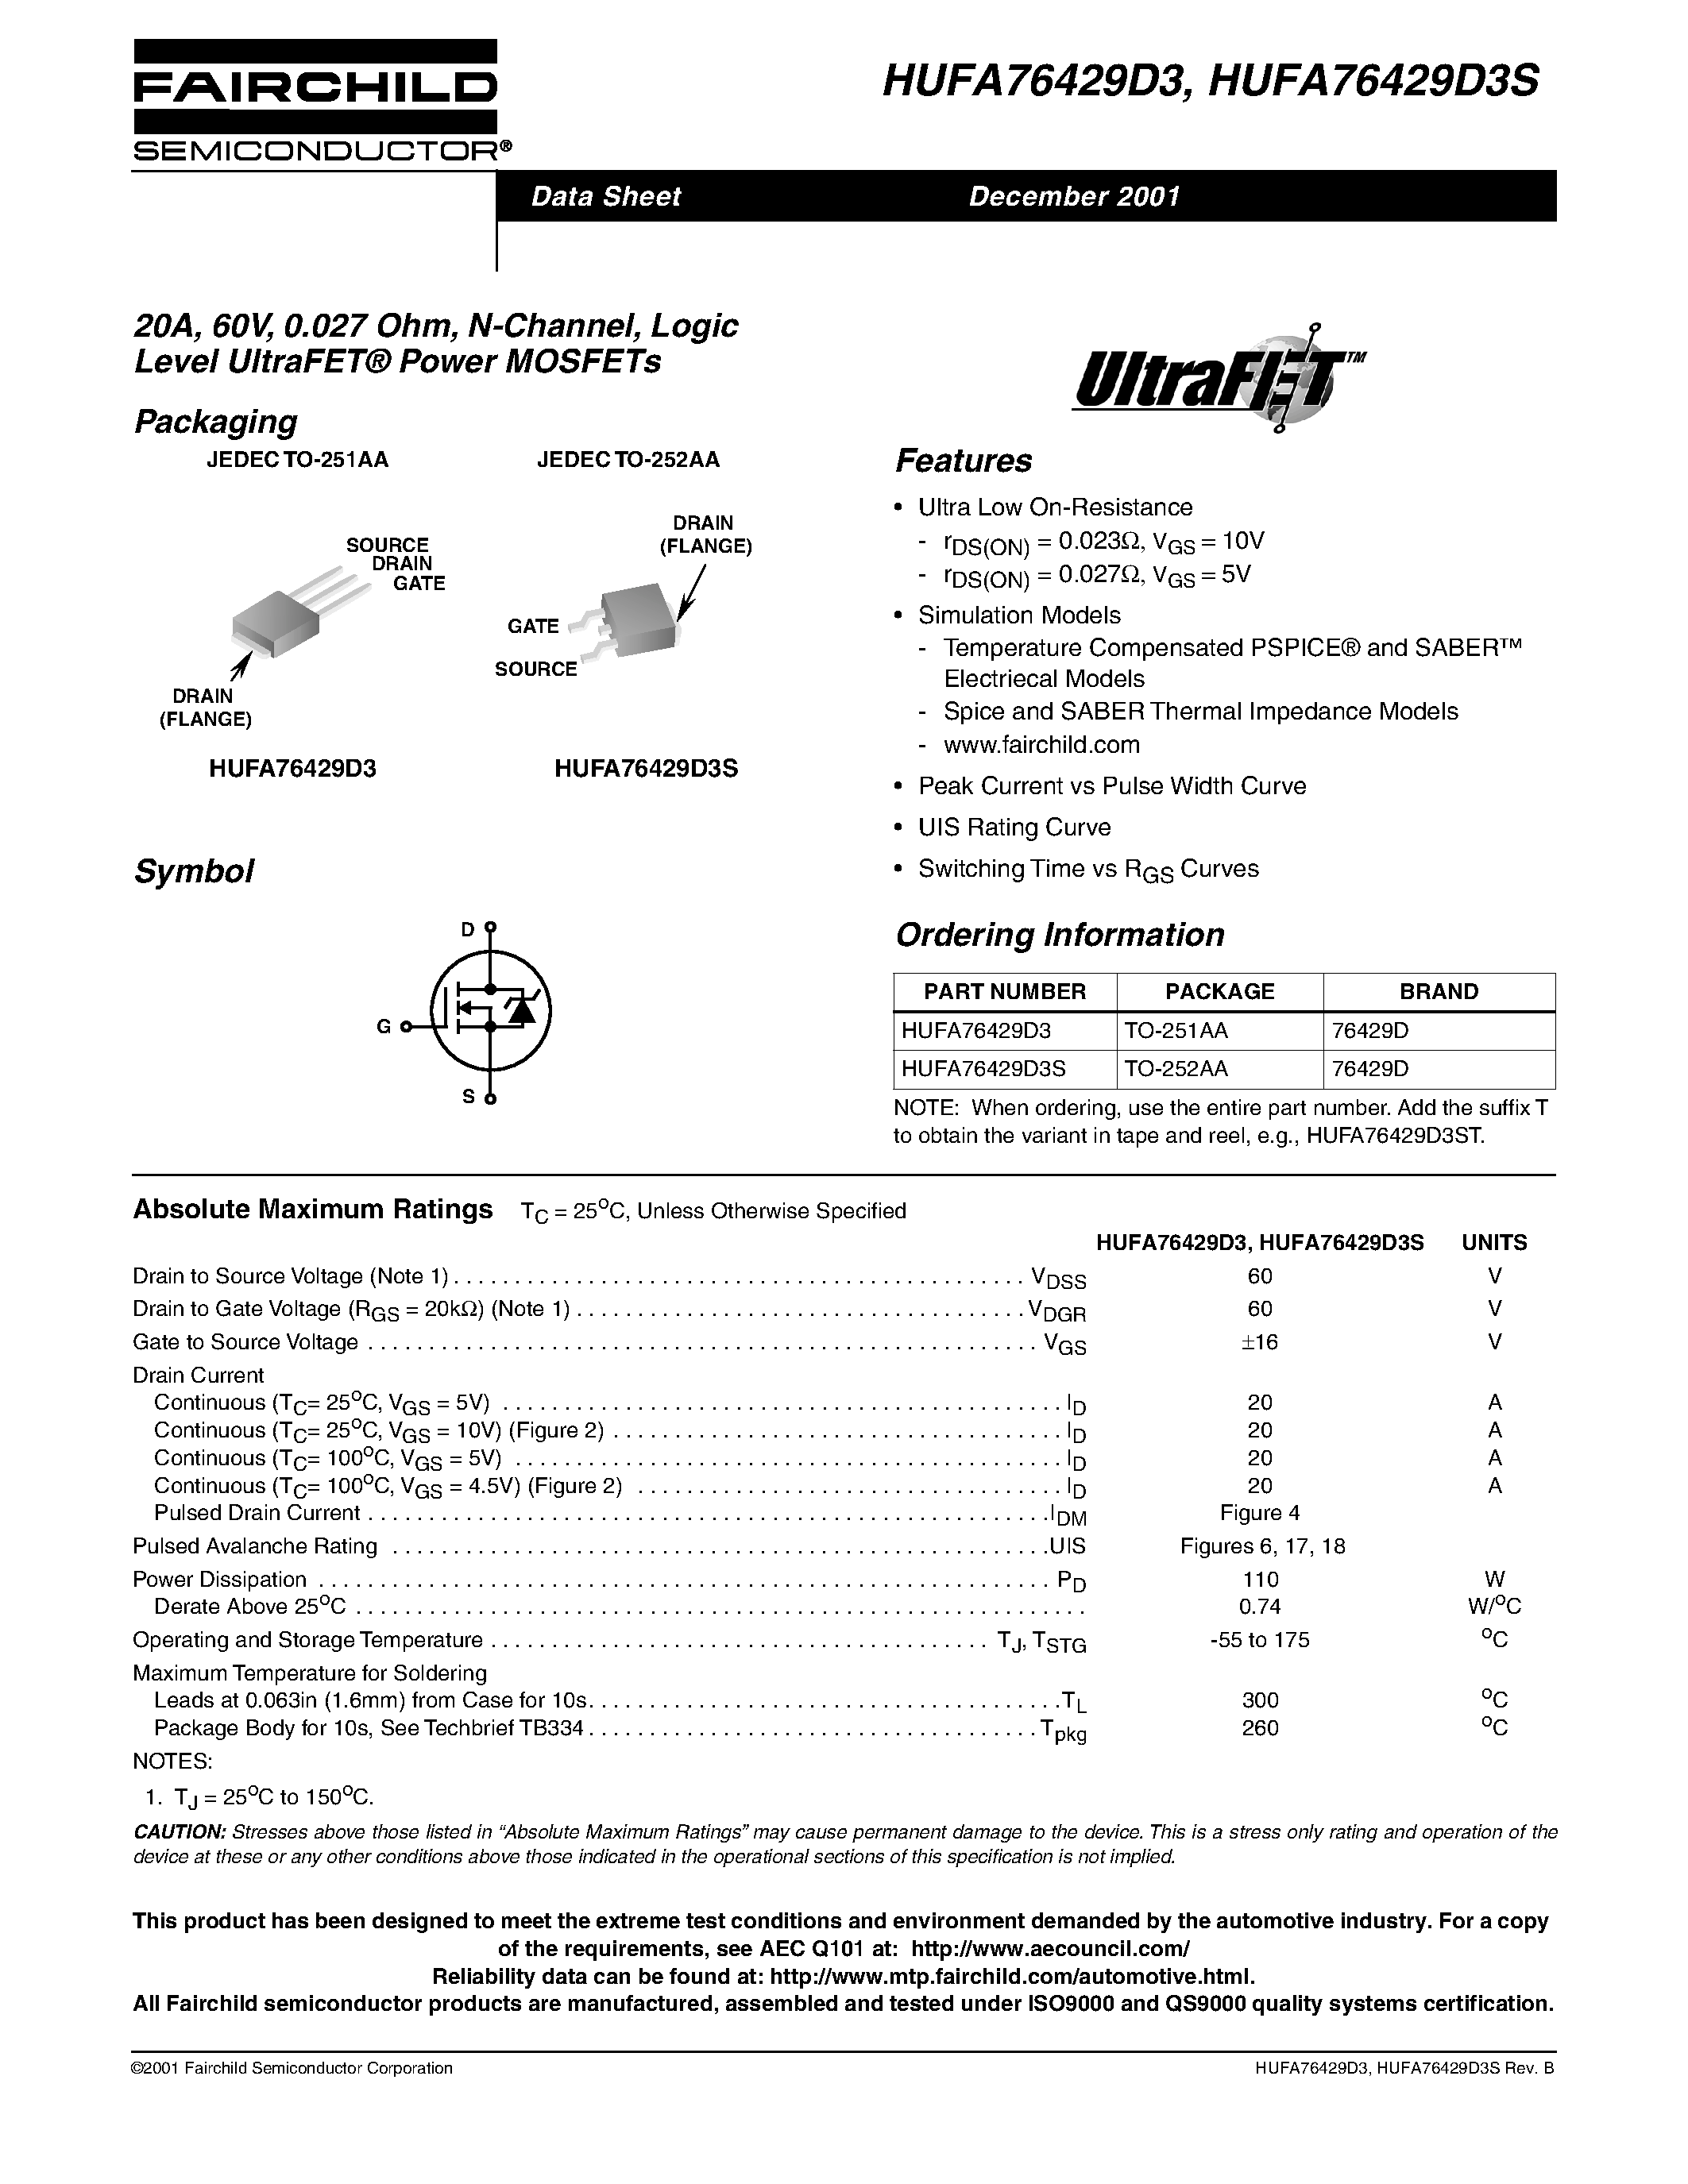 Даташит HUFA76429D3S - 20A/ 60V/ 0.027 Ohm/ N-Channel/ Logic Level UltraFET Power MOSFETs страница 1